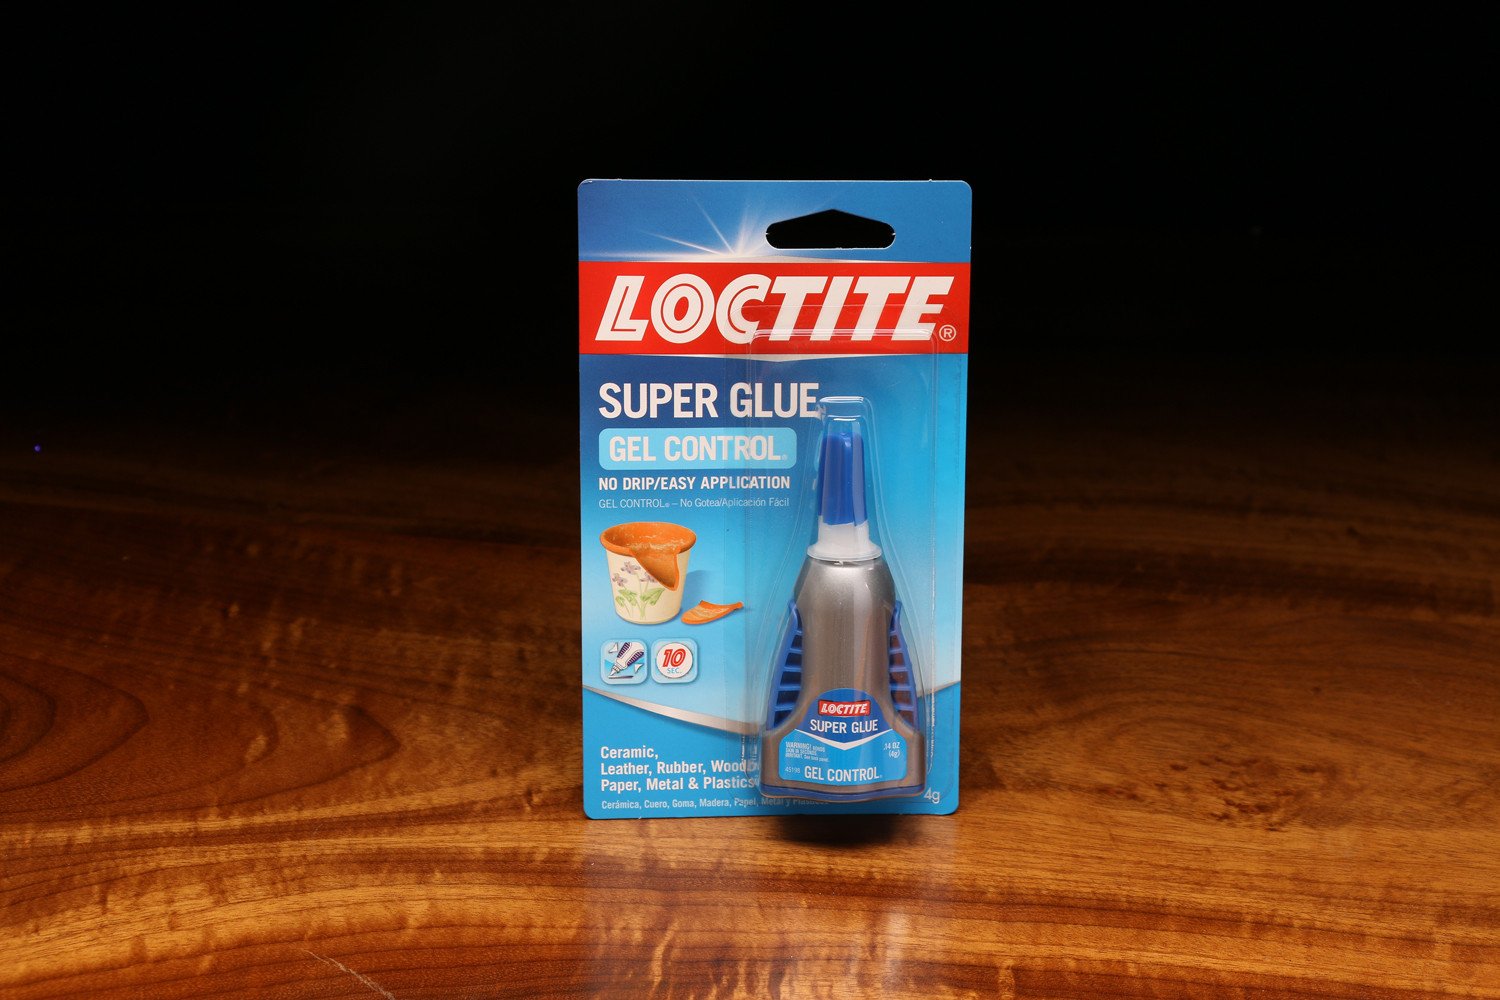 Loctite Super Glue Gel - 4 g bottle